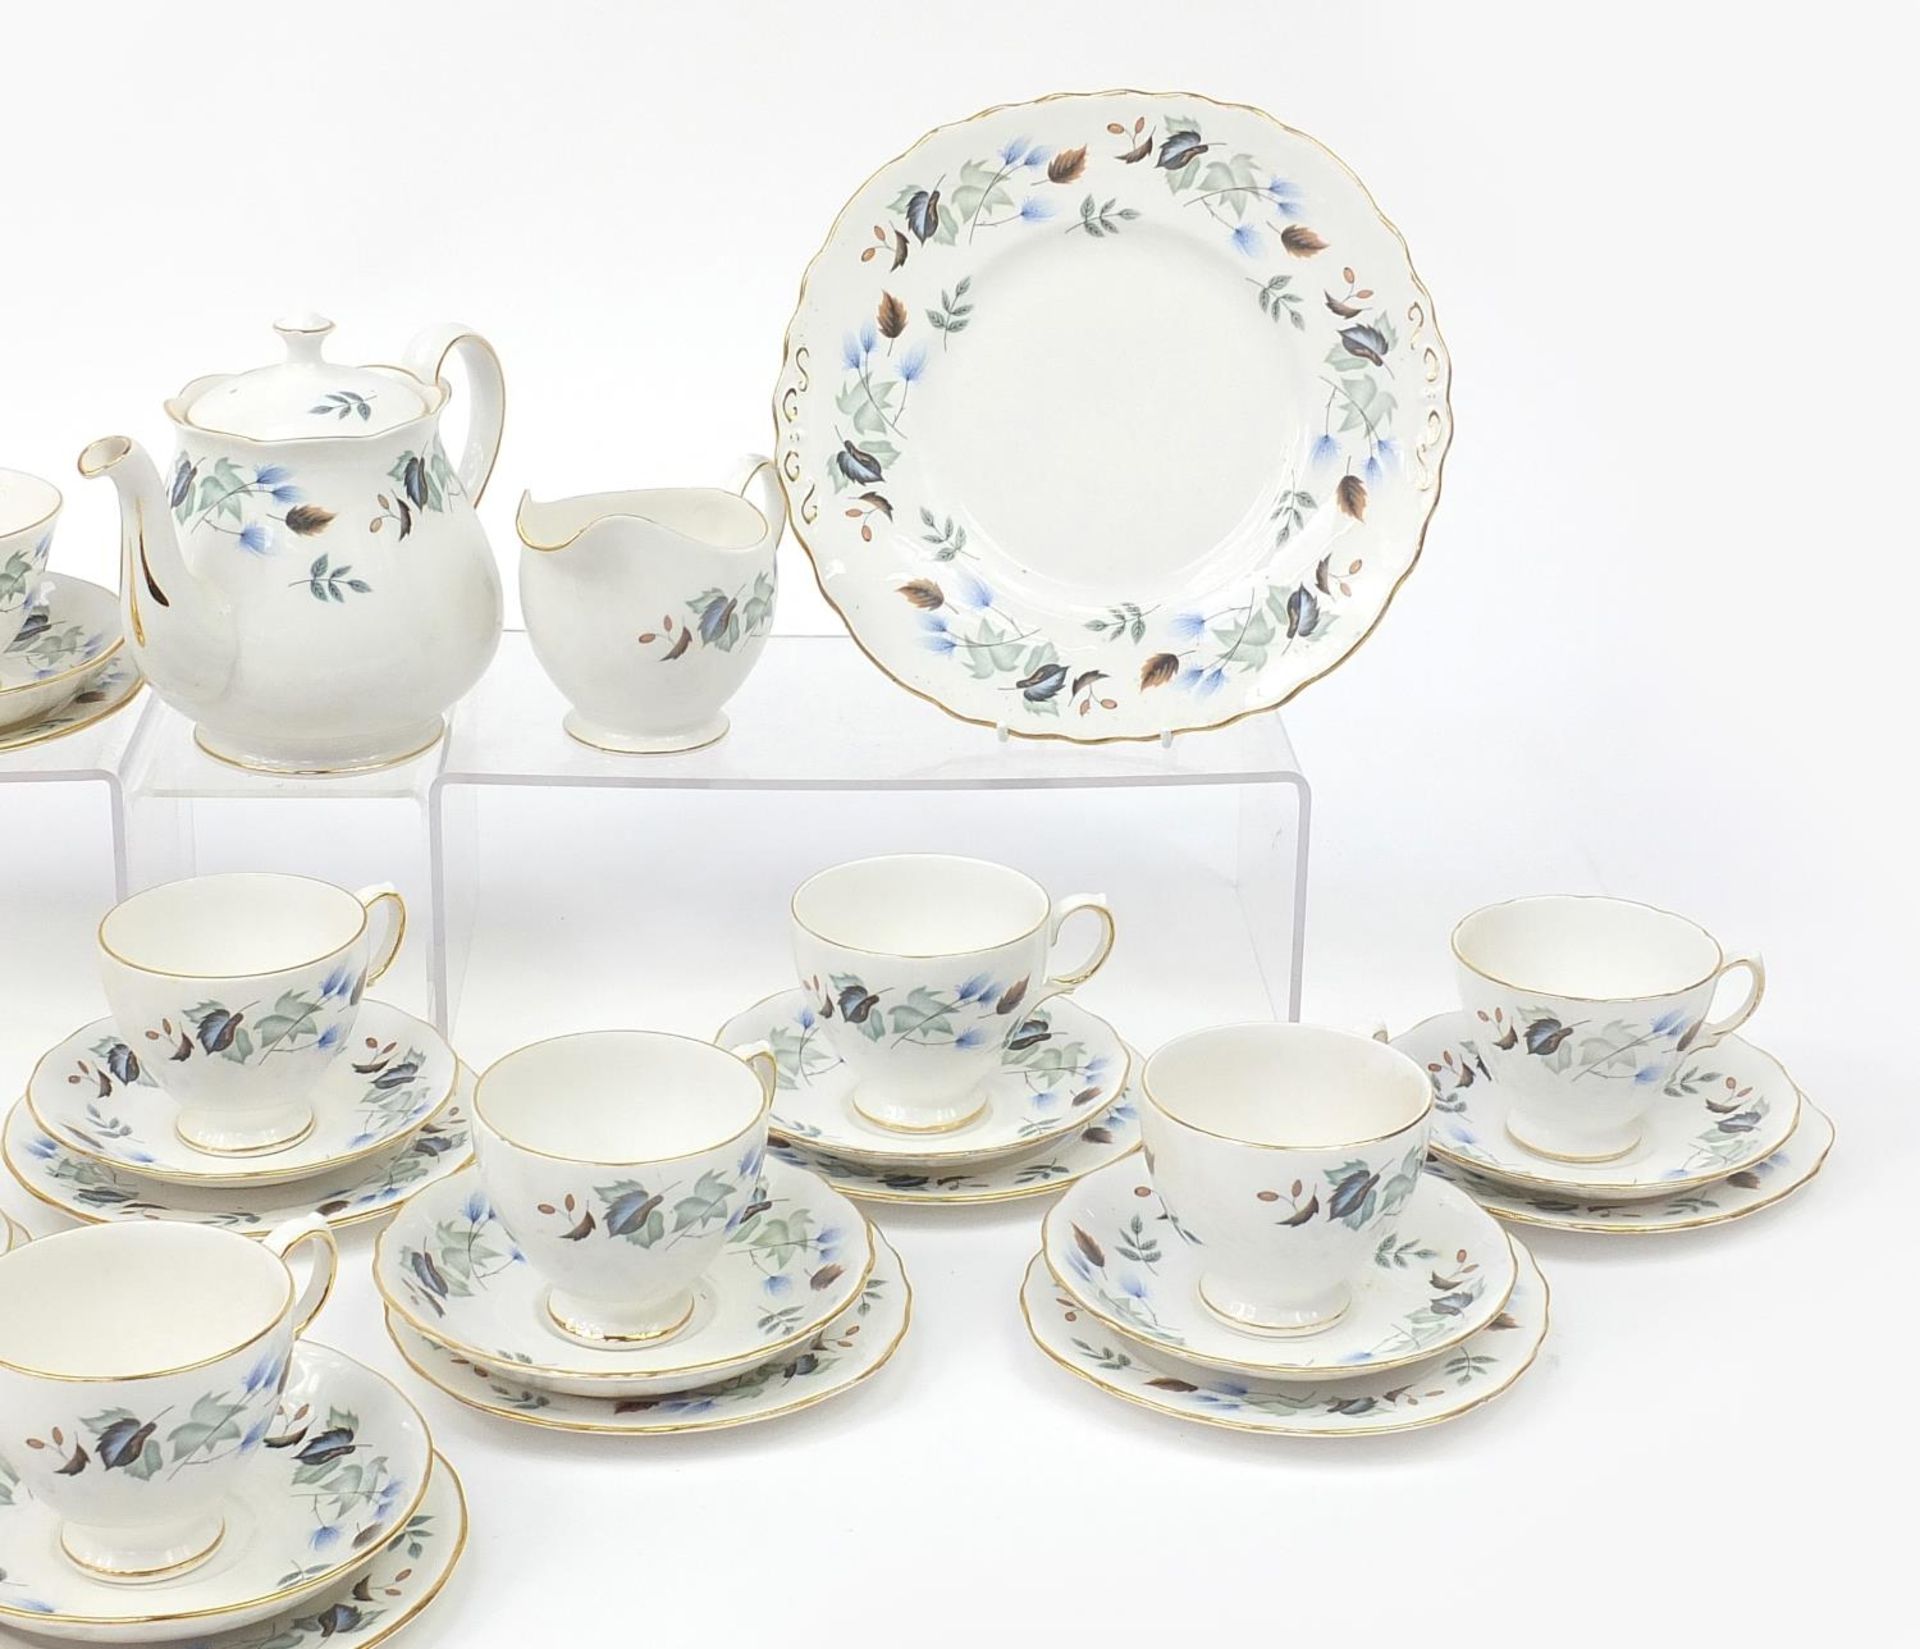 Colclough tea including teapot, sugar bowl and milk jug, the teapot 21cm wide - Image 3 of 4